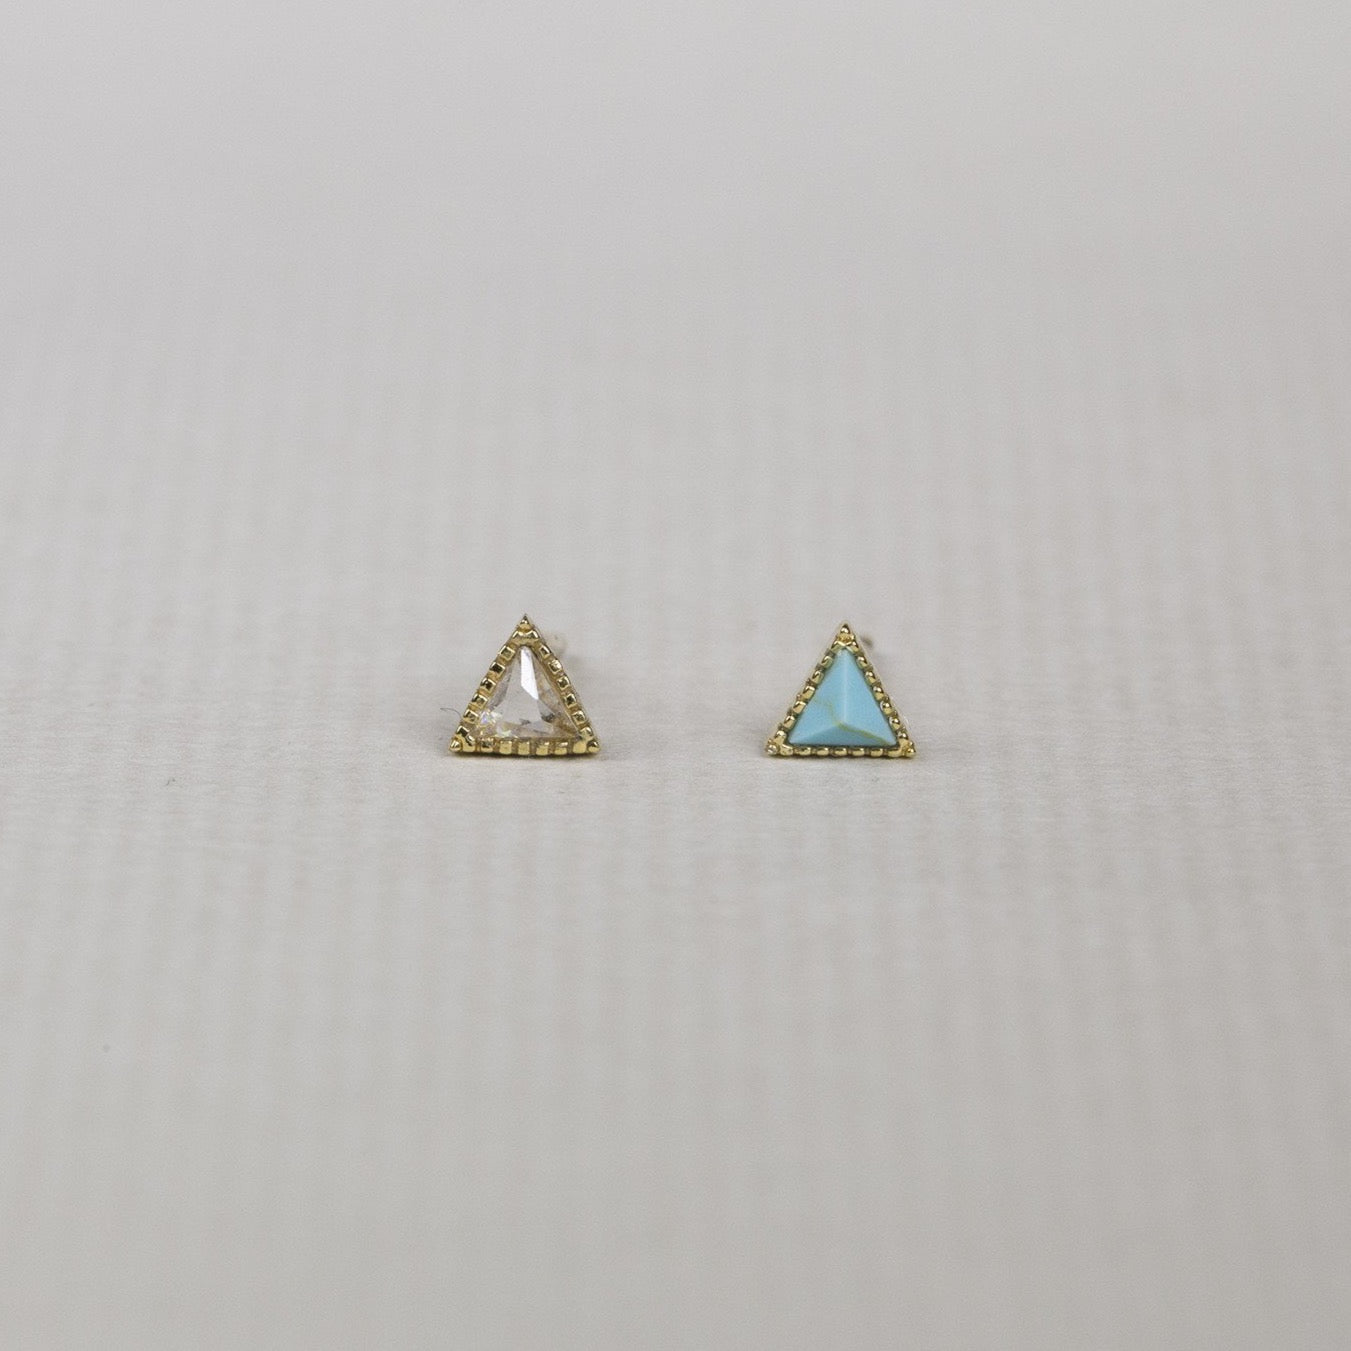 bright and sparkly mini triangle studs in most delicious colours